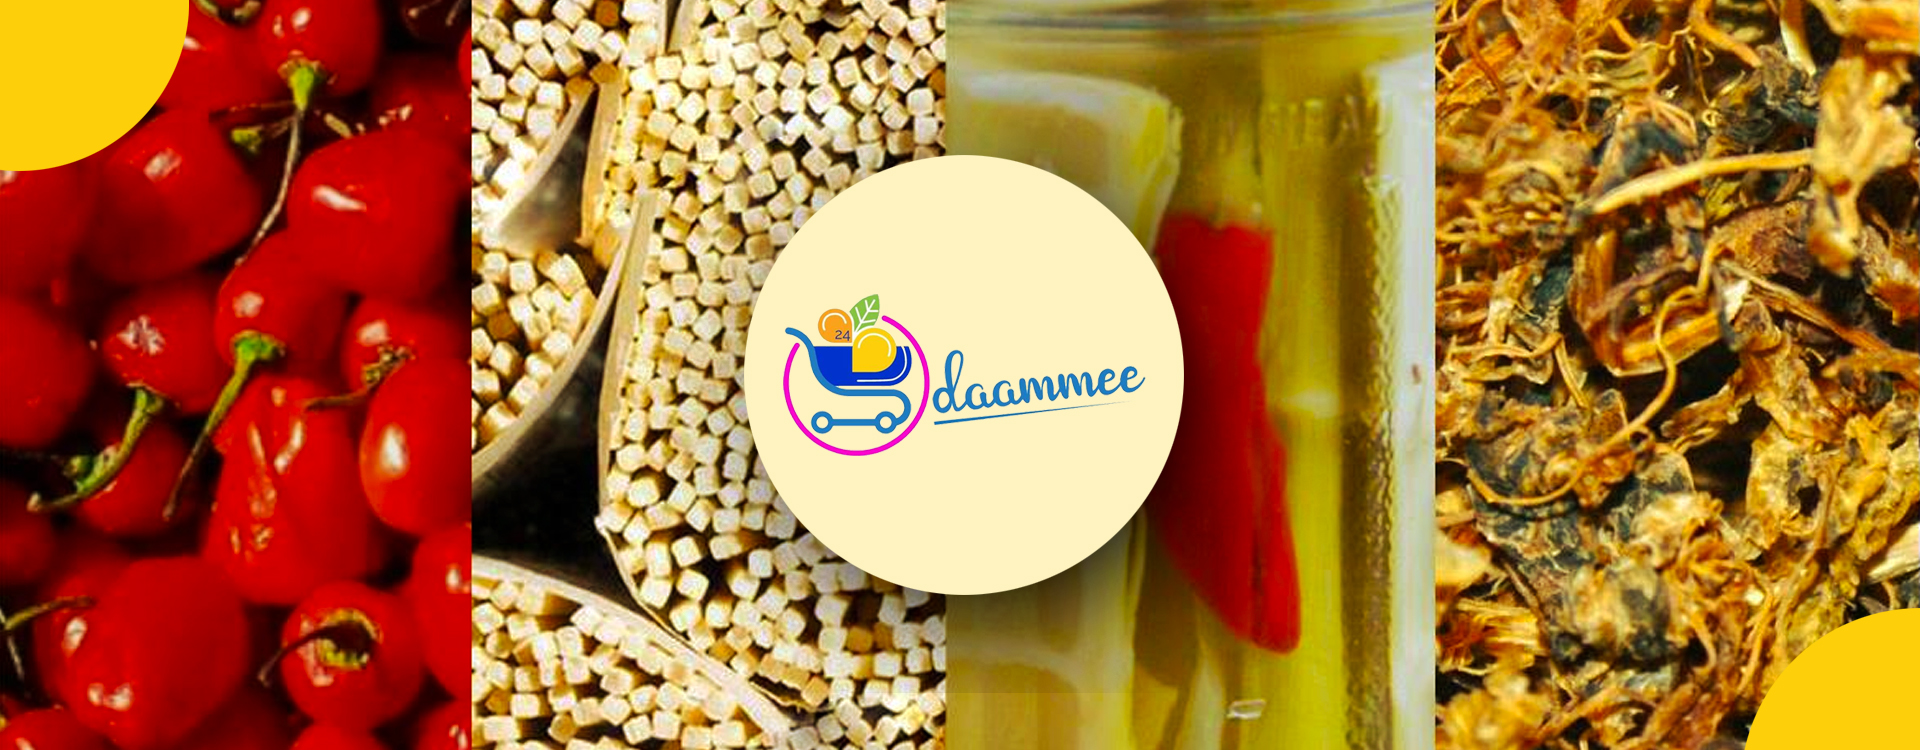 Daammee Darjeeling Start-up E-commerce